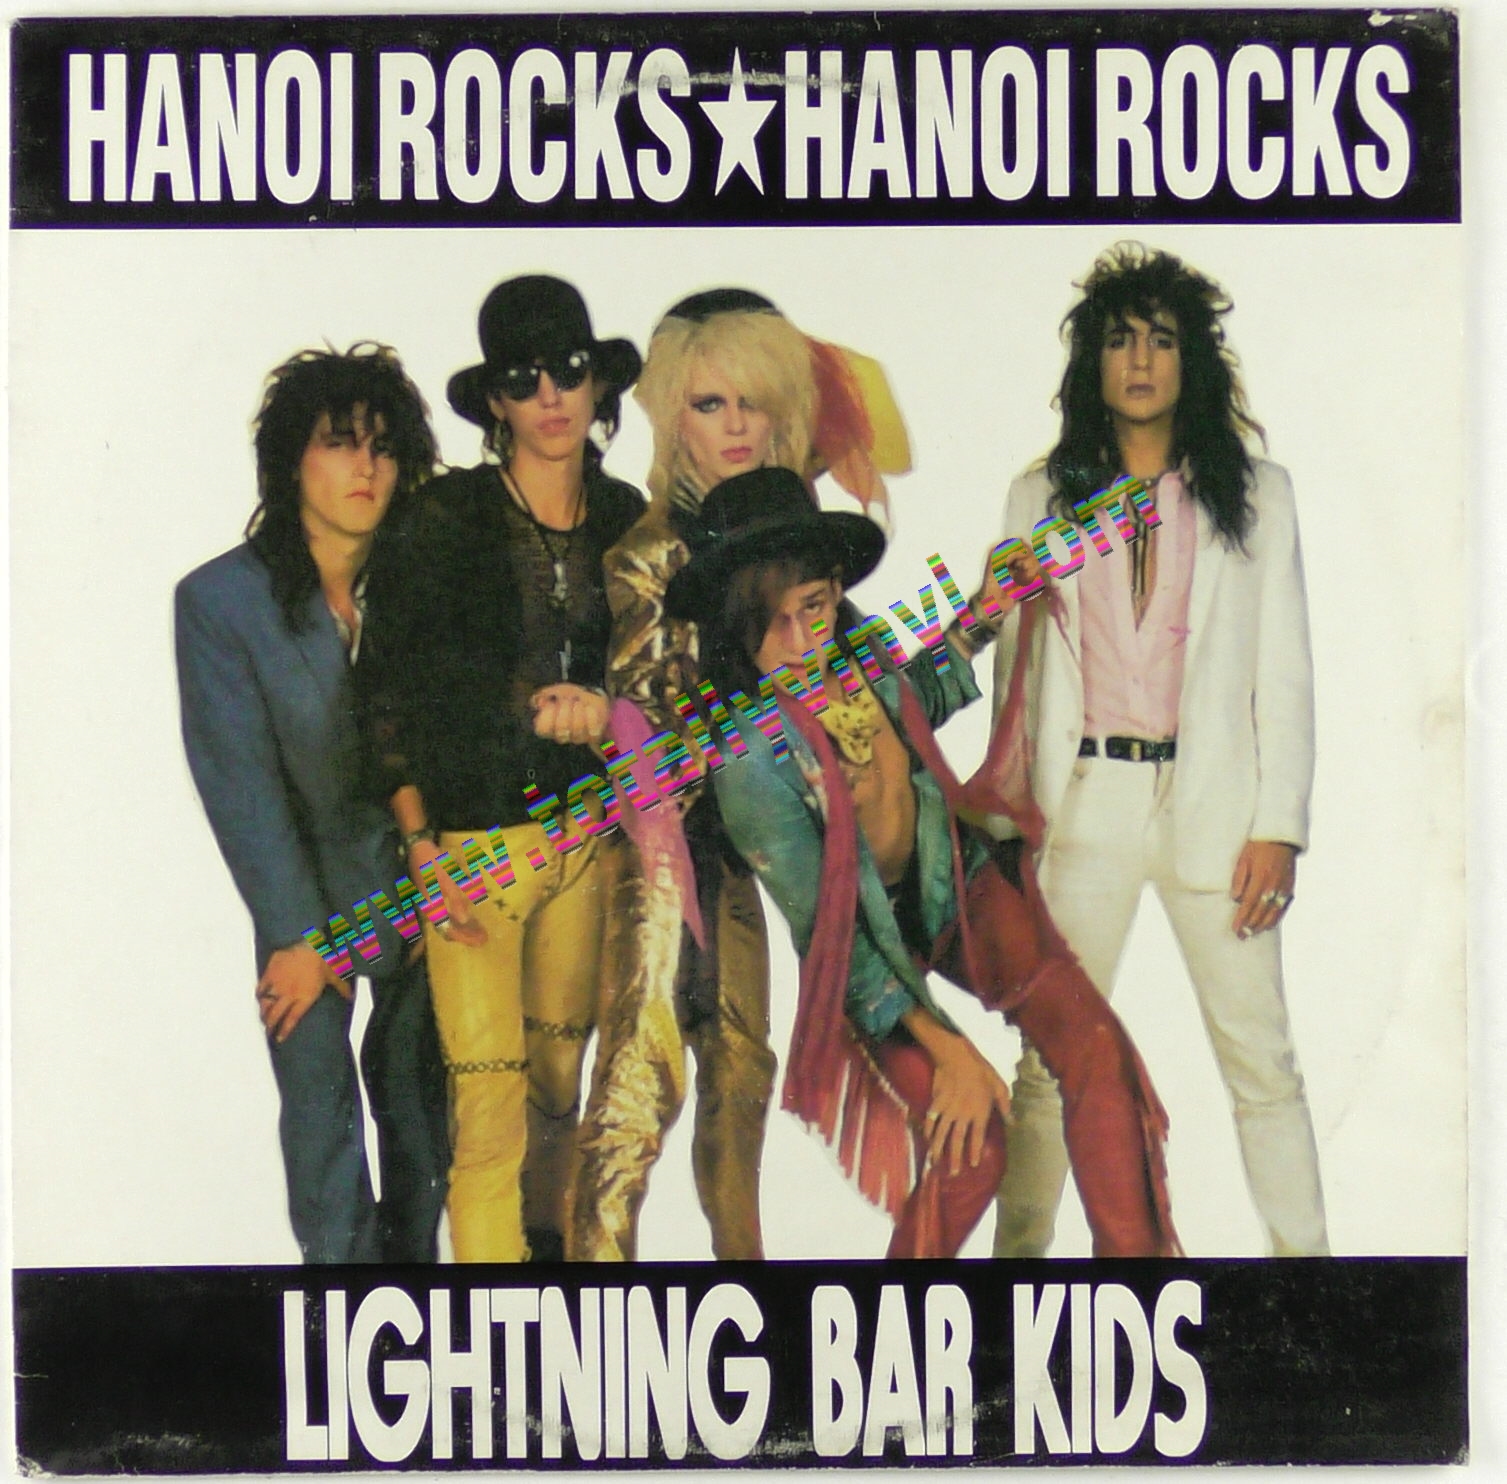 hanoi rocks sold records